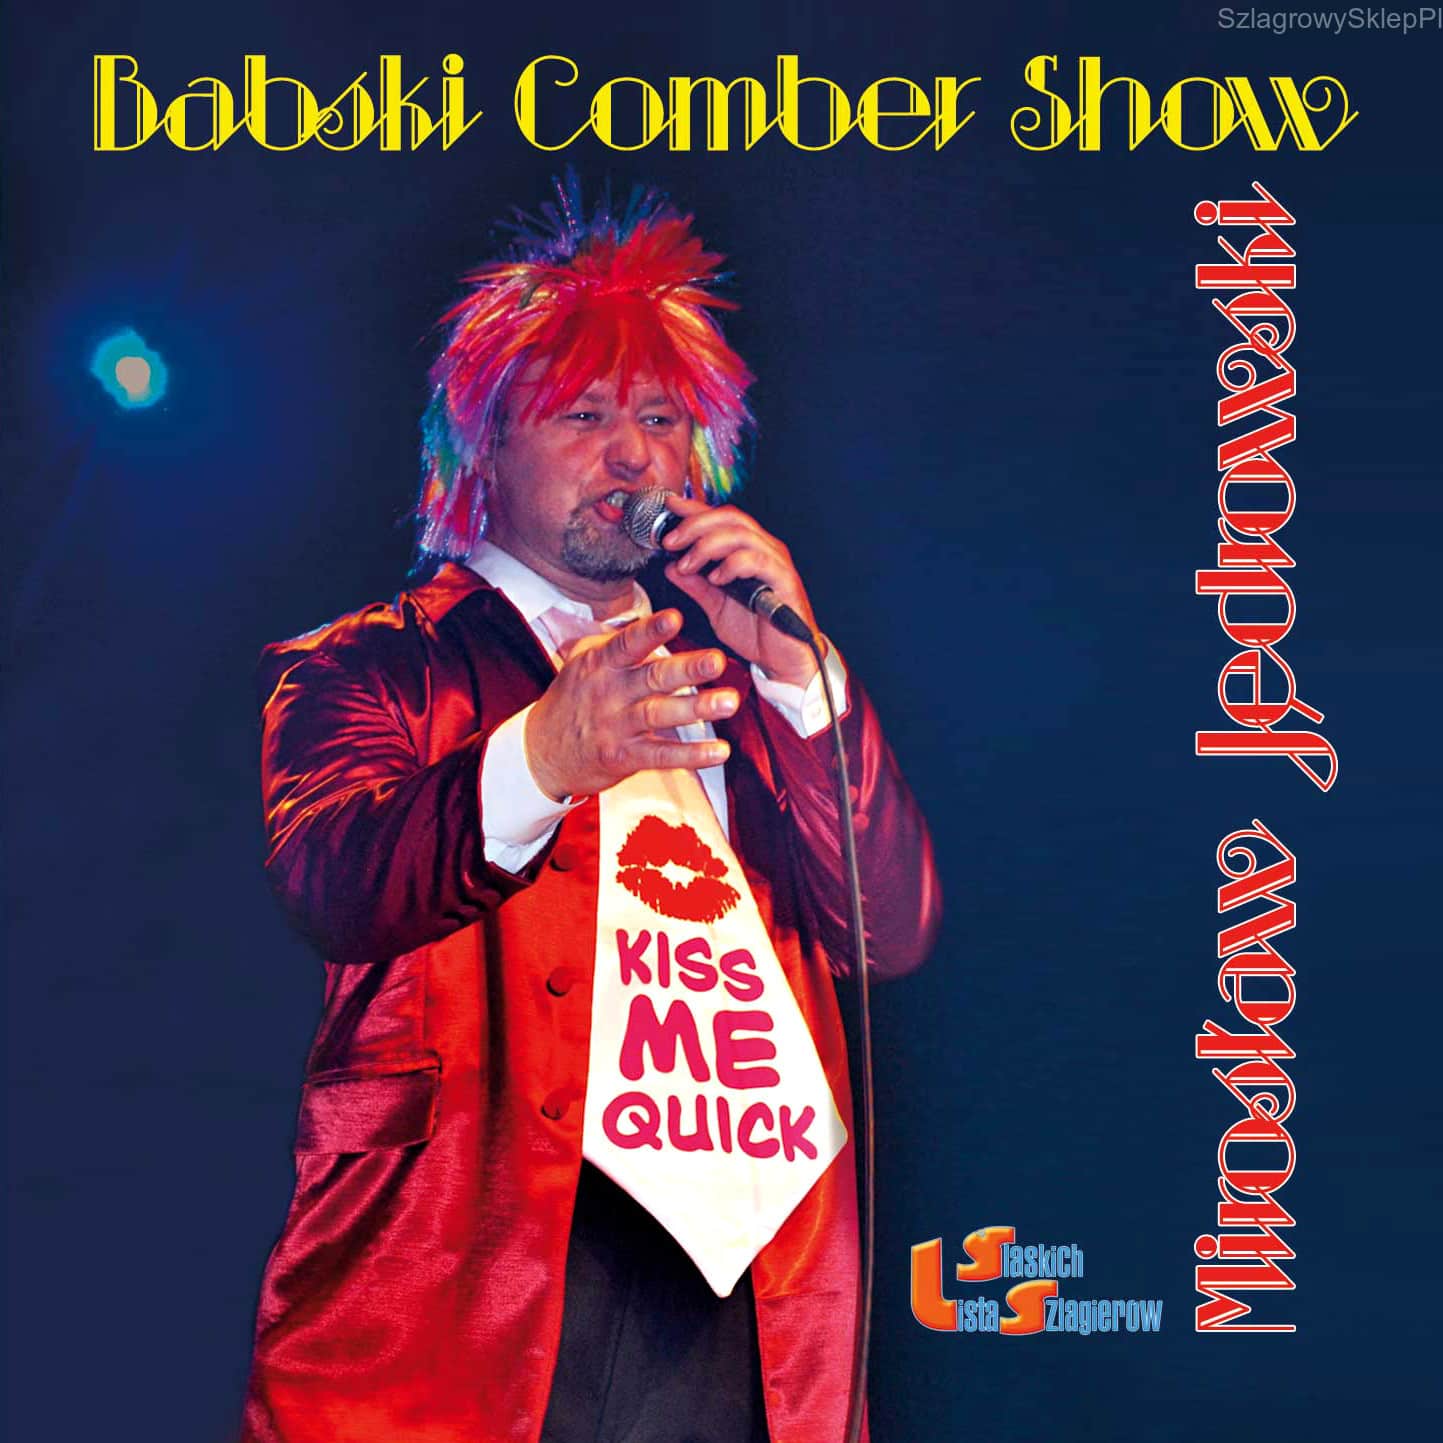 Babski Comber Show